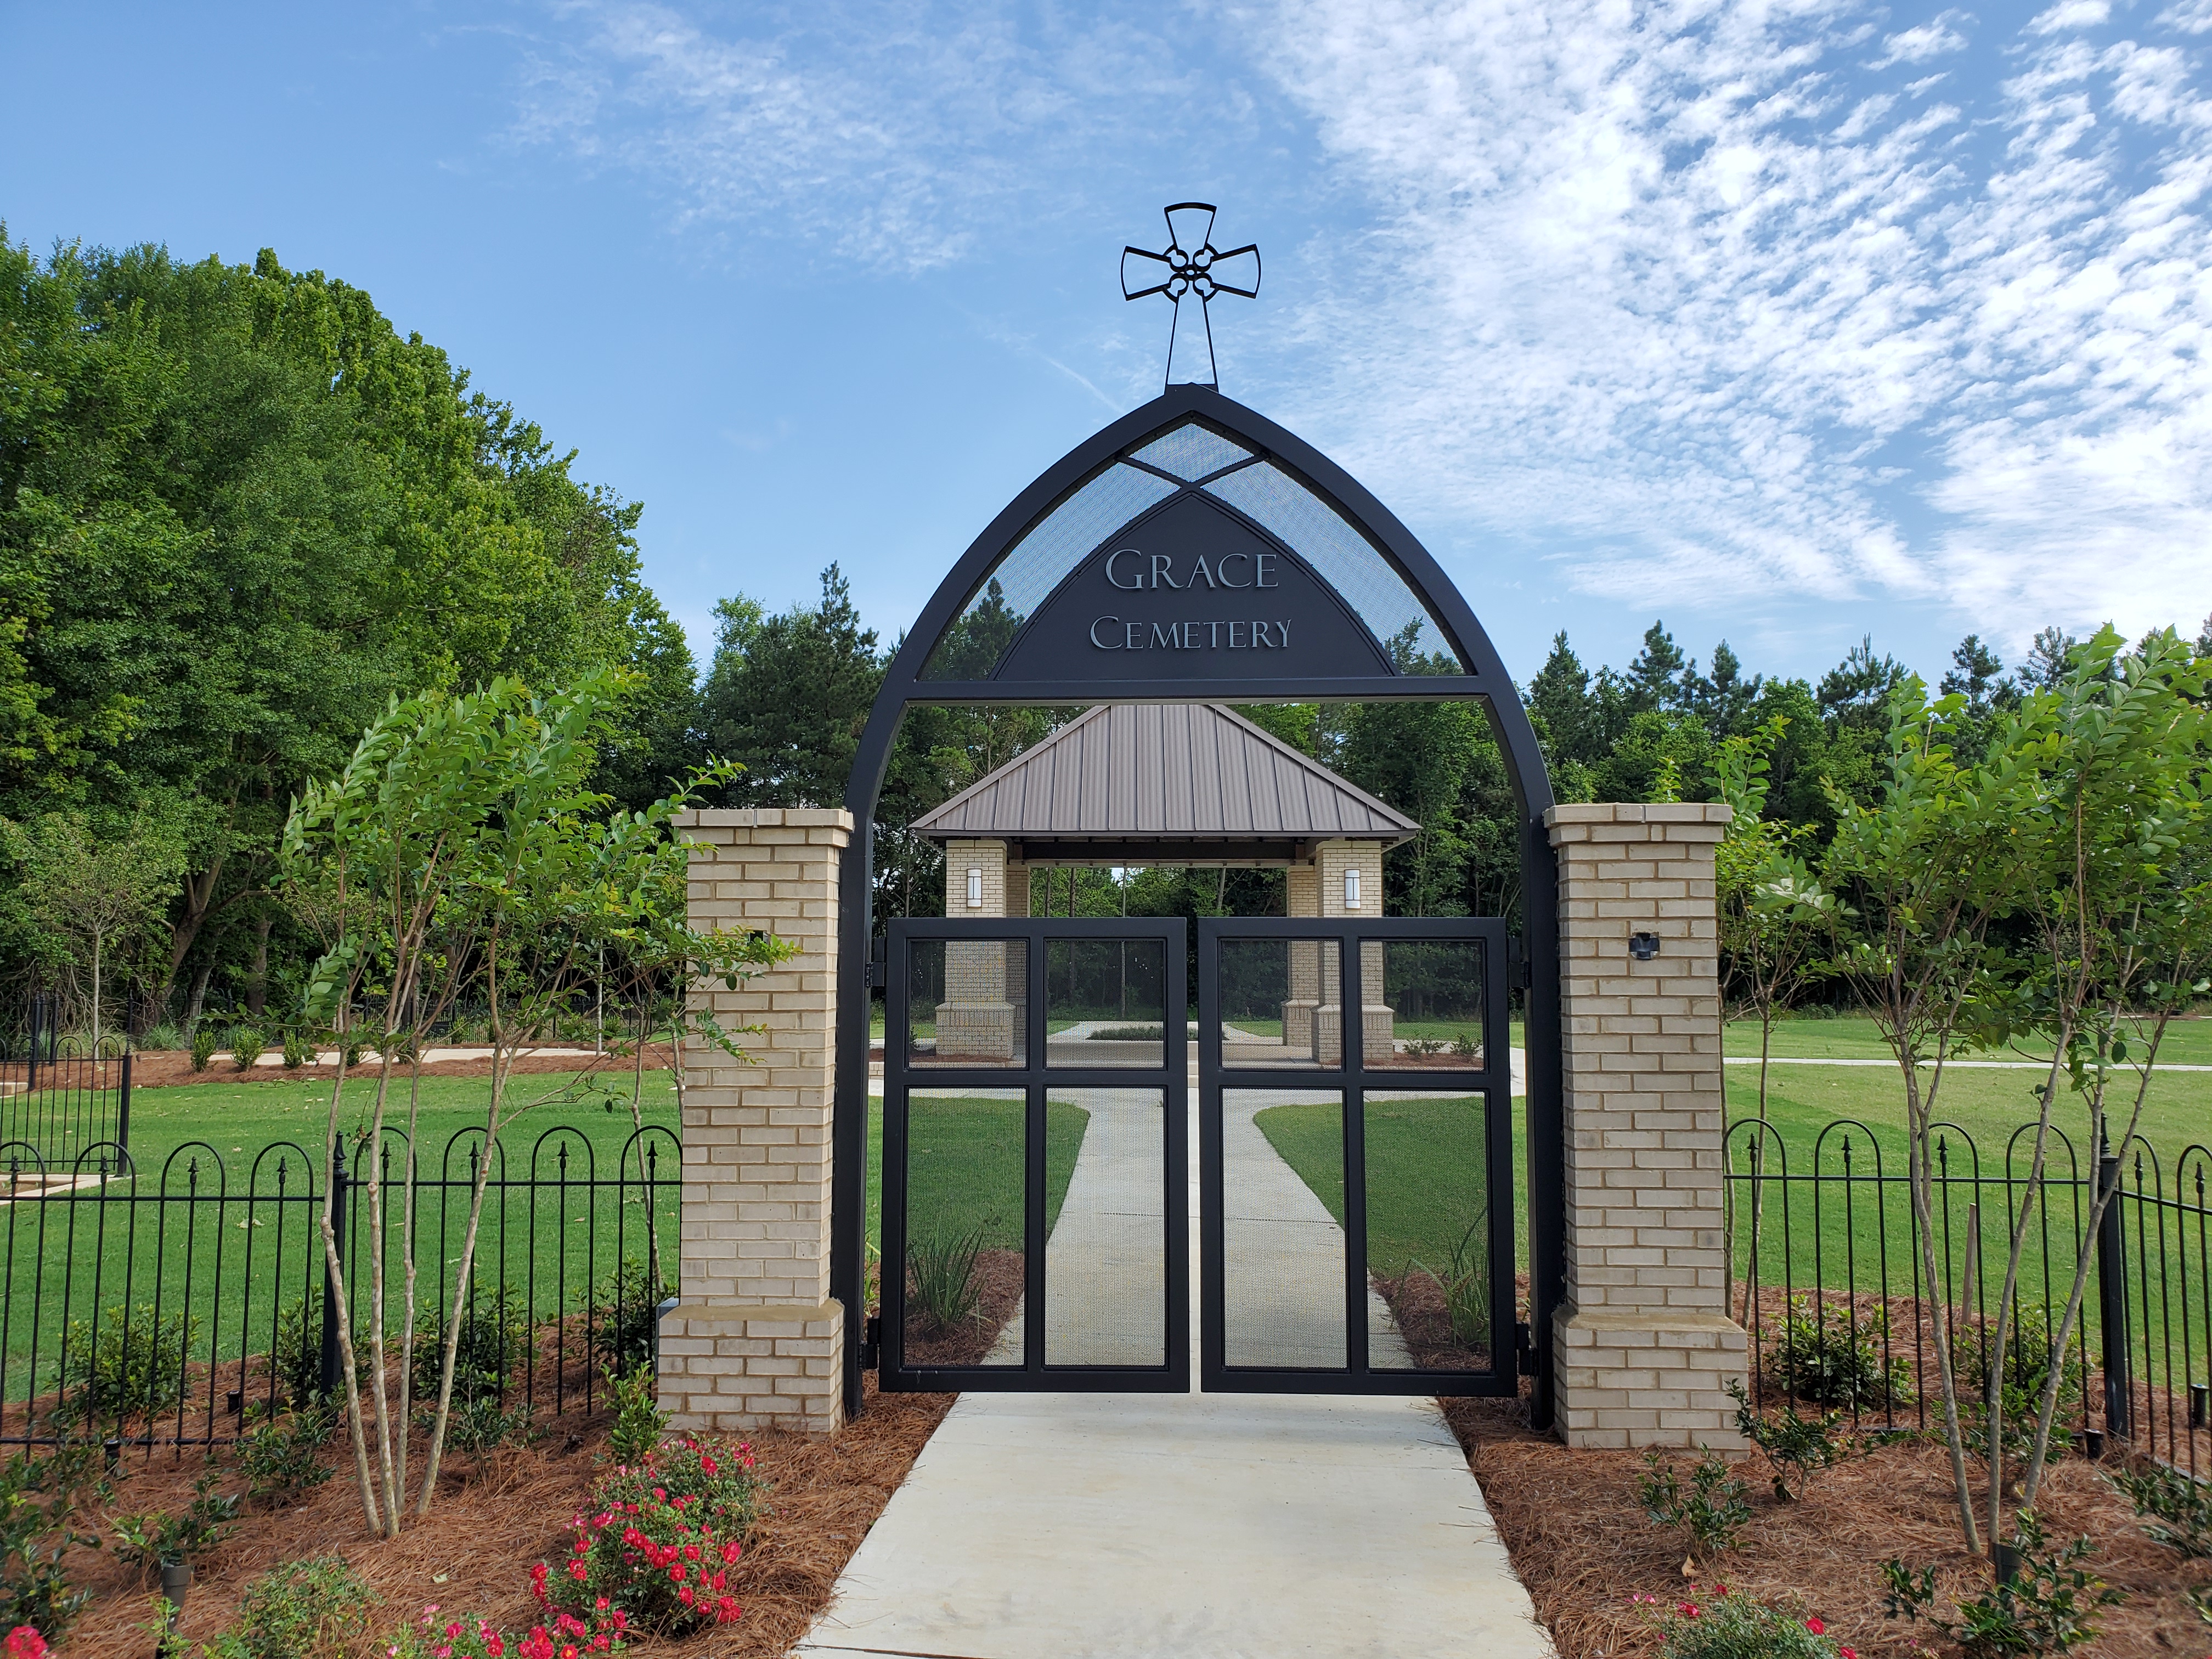 grace cemetery gates